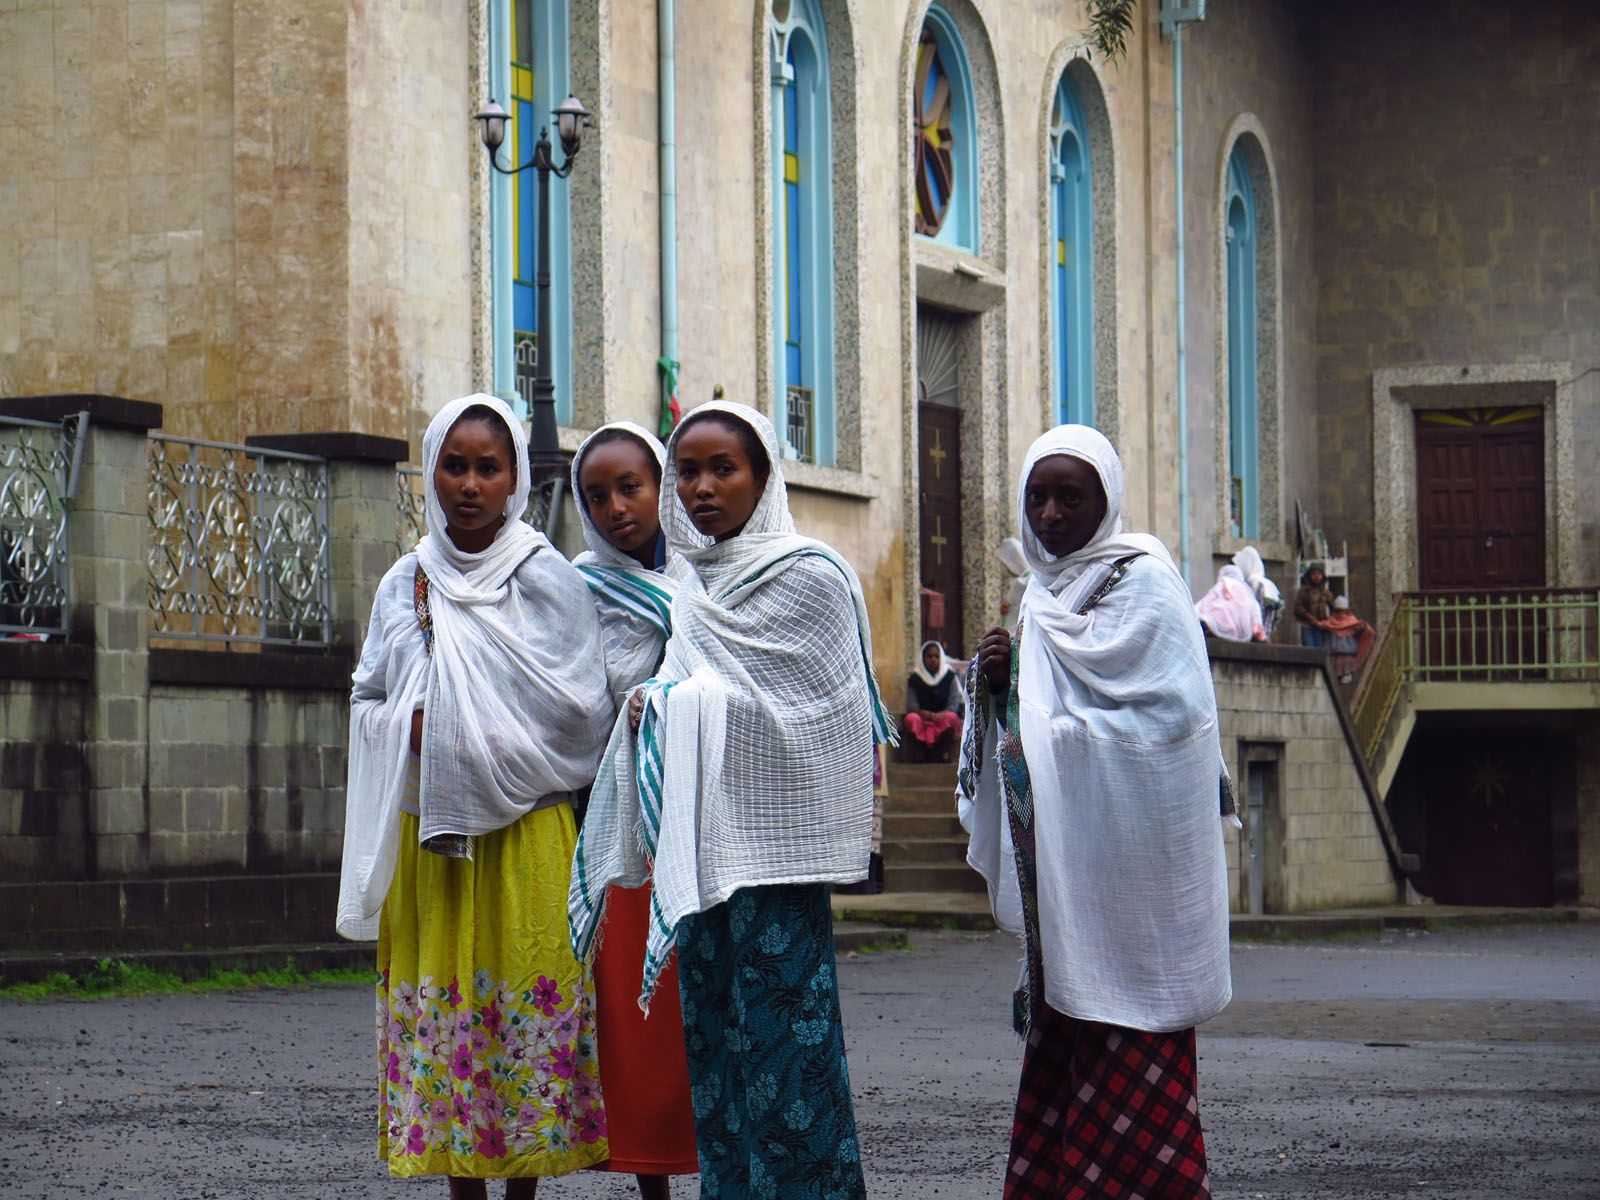 5è Premi LLEURE, "Vels blancs" Etiopia, Autor: Angel Hom